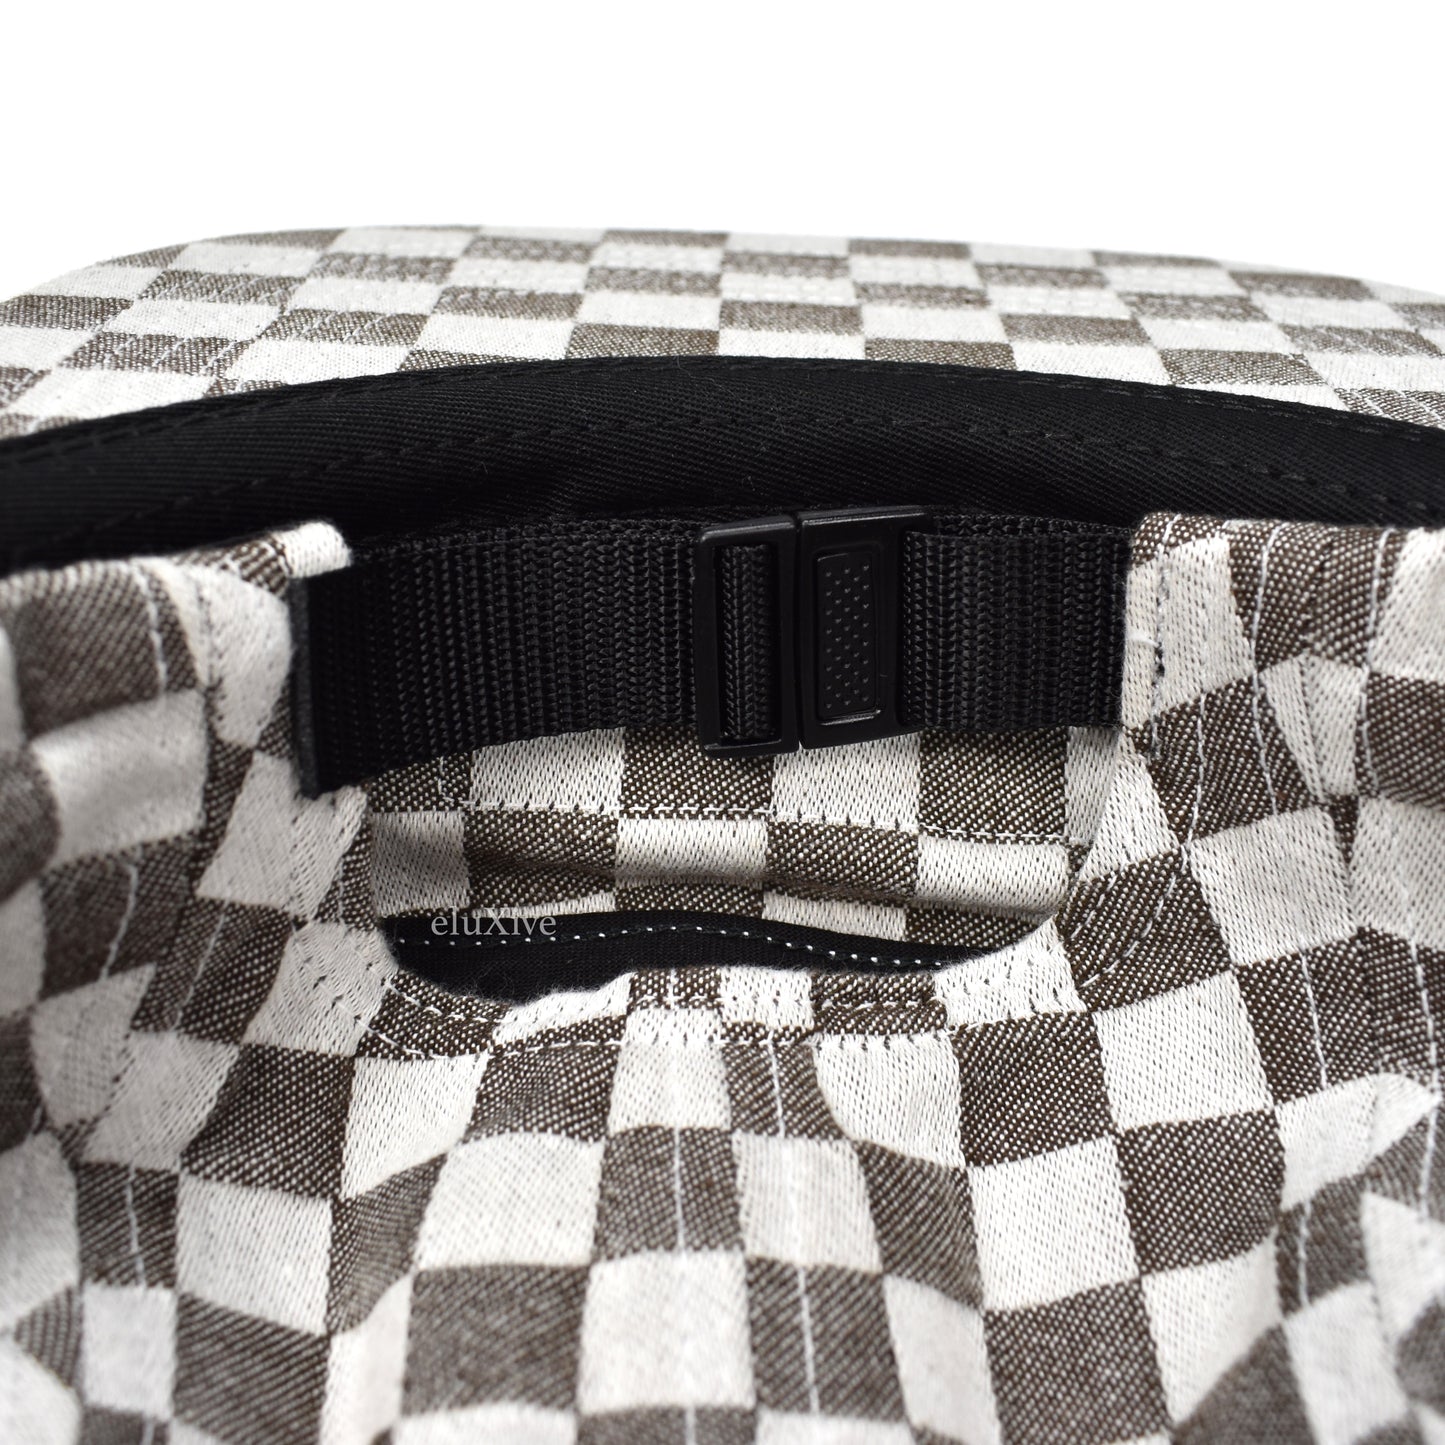 Supreme - Brown Box Logo Checkered Hat